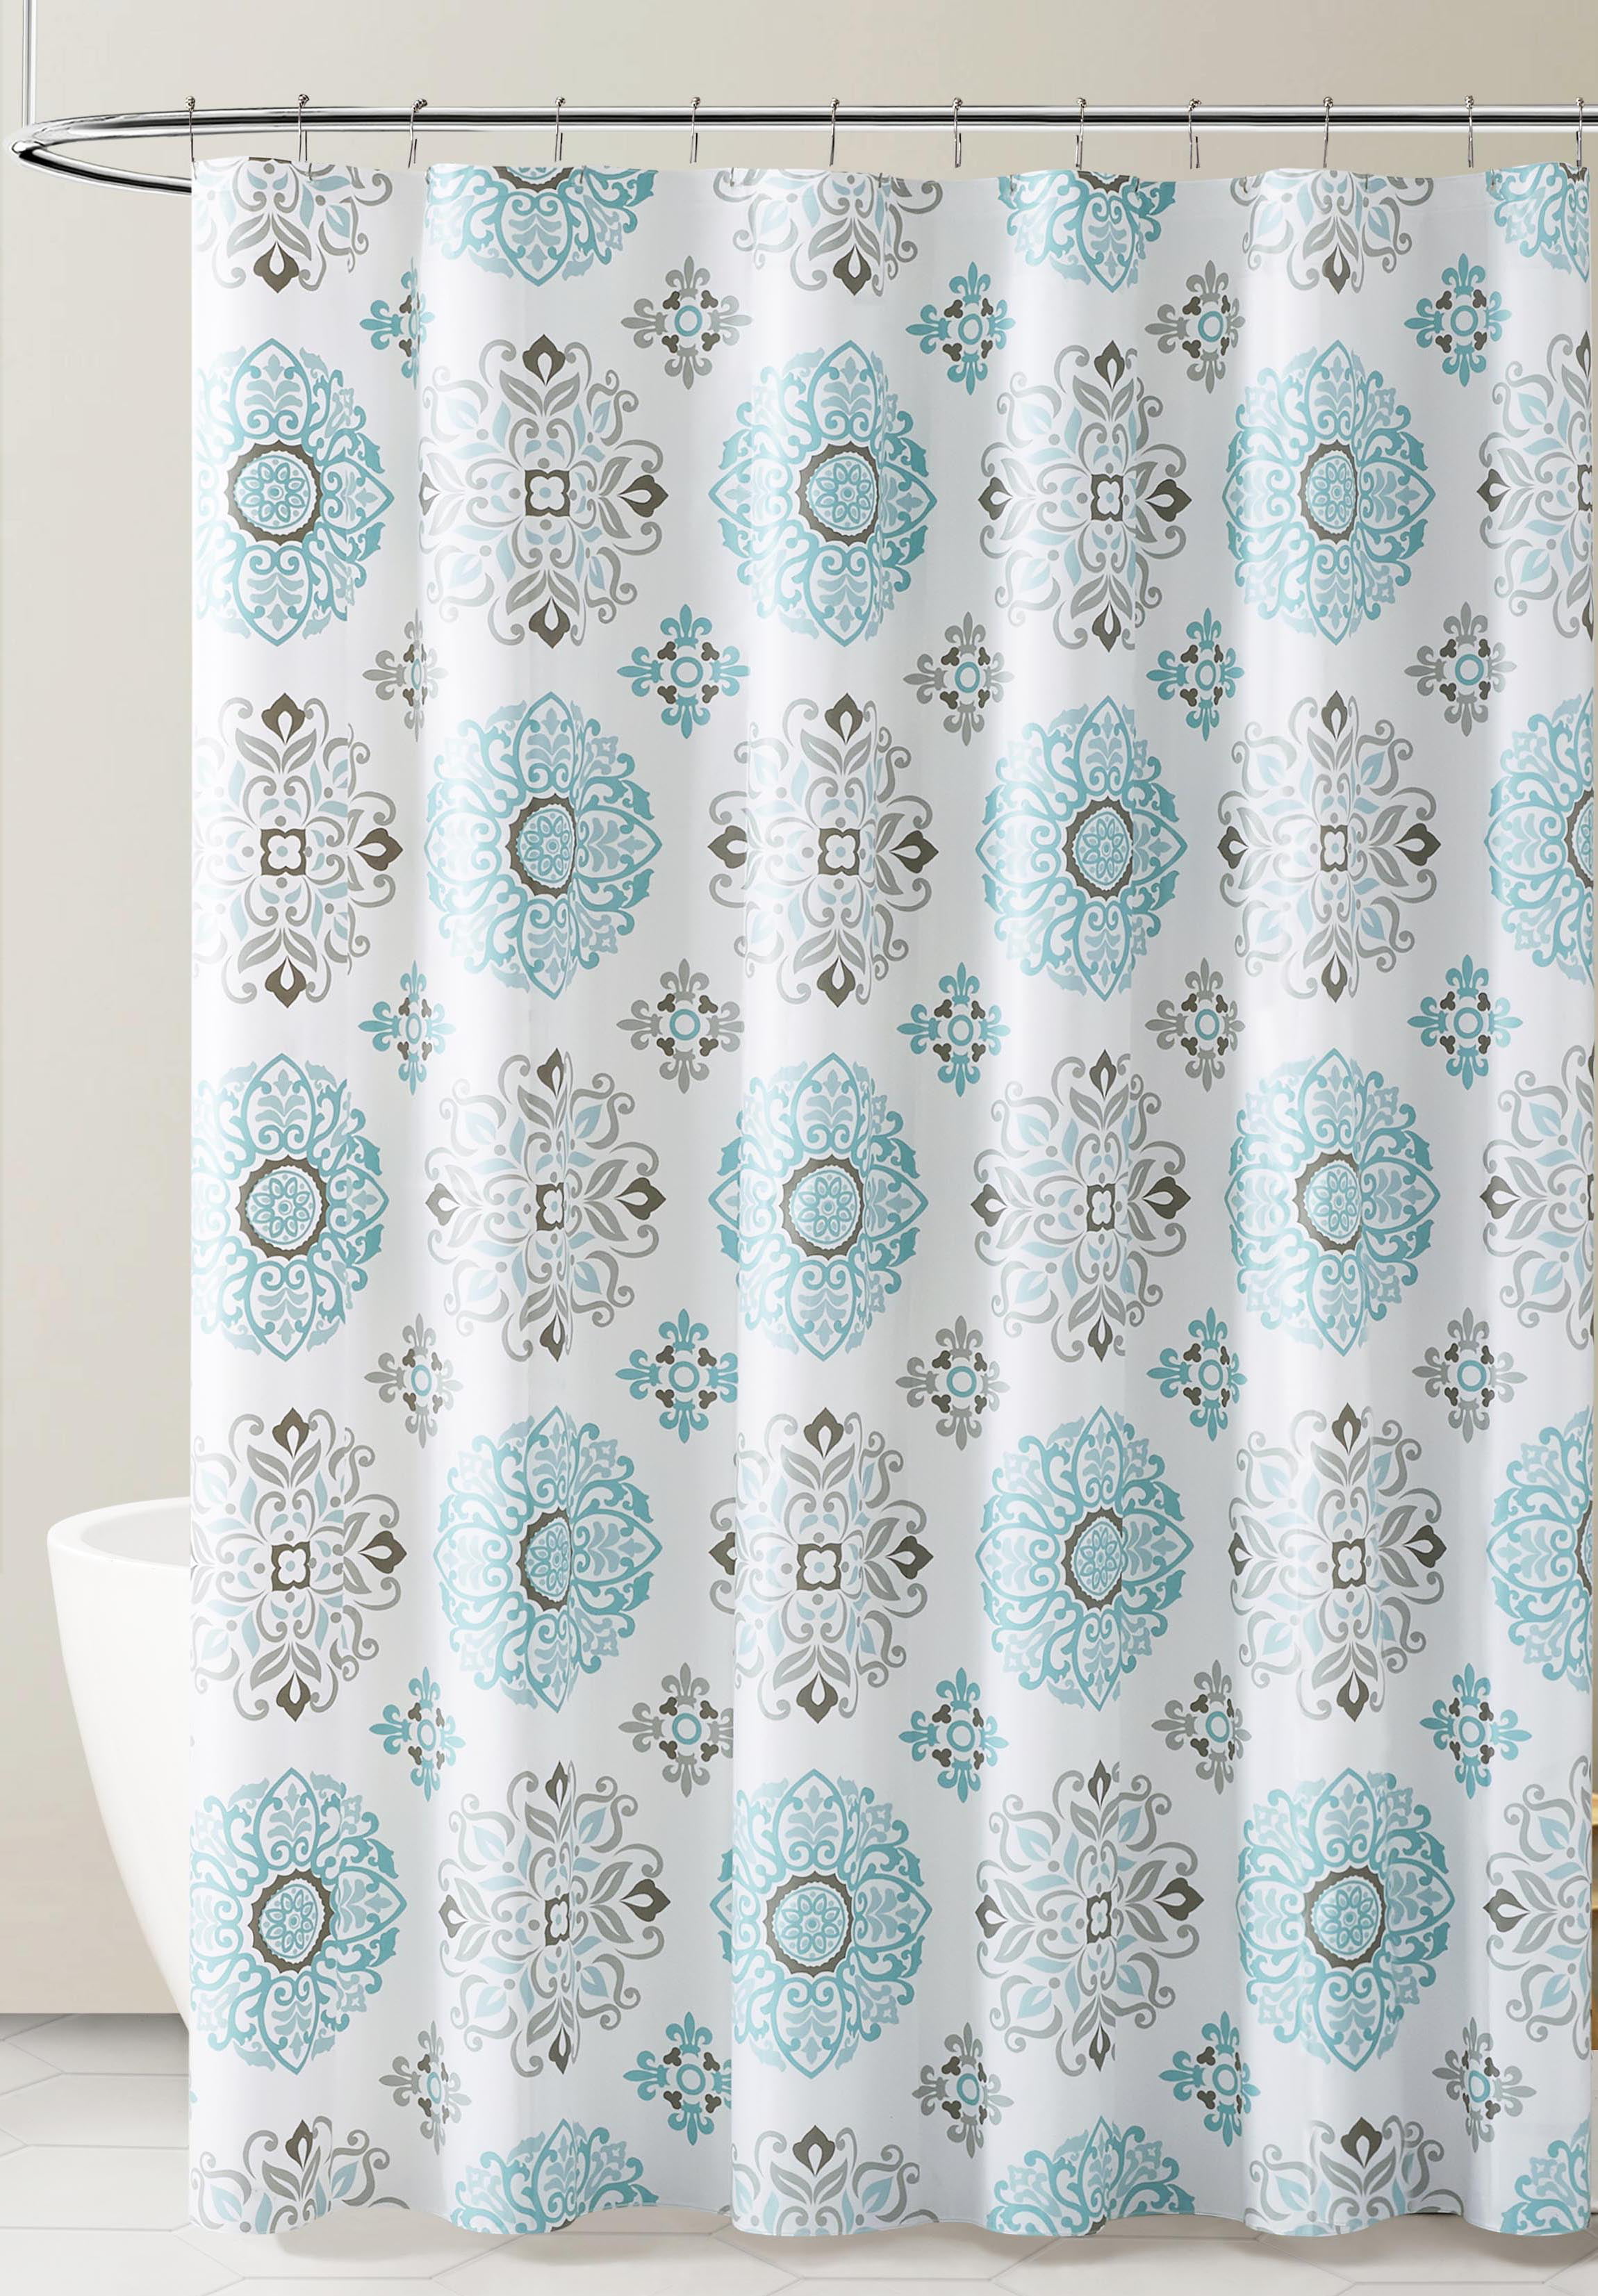 Peva Odor & Chlorine Free Vinyl White Inspirational Bathroom Bath Shower Curtain 